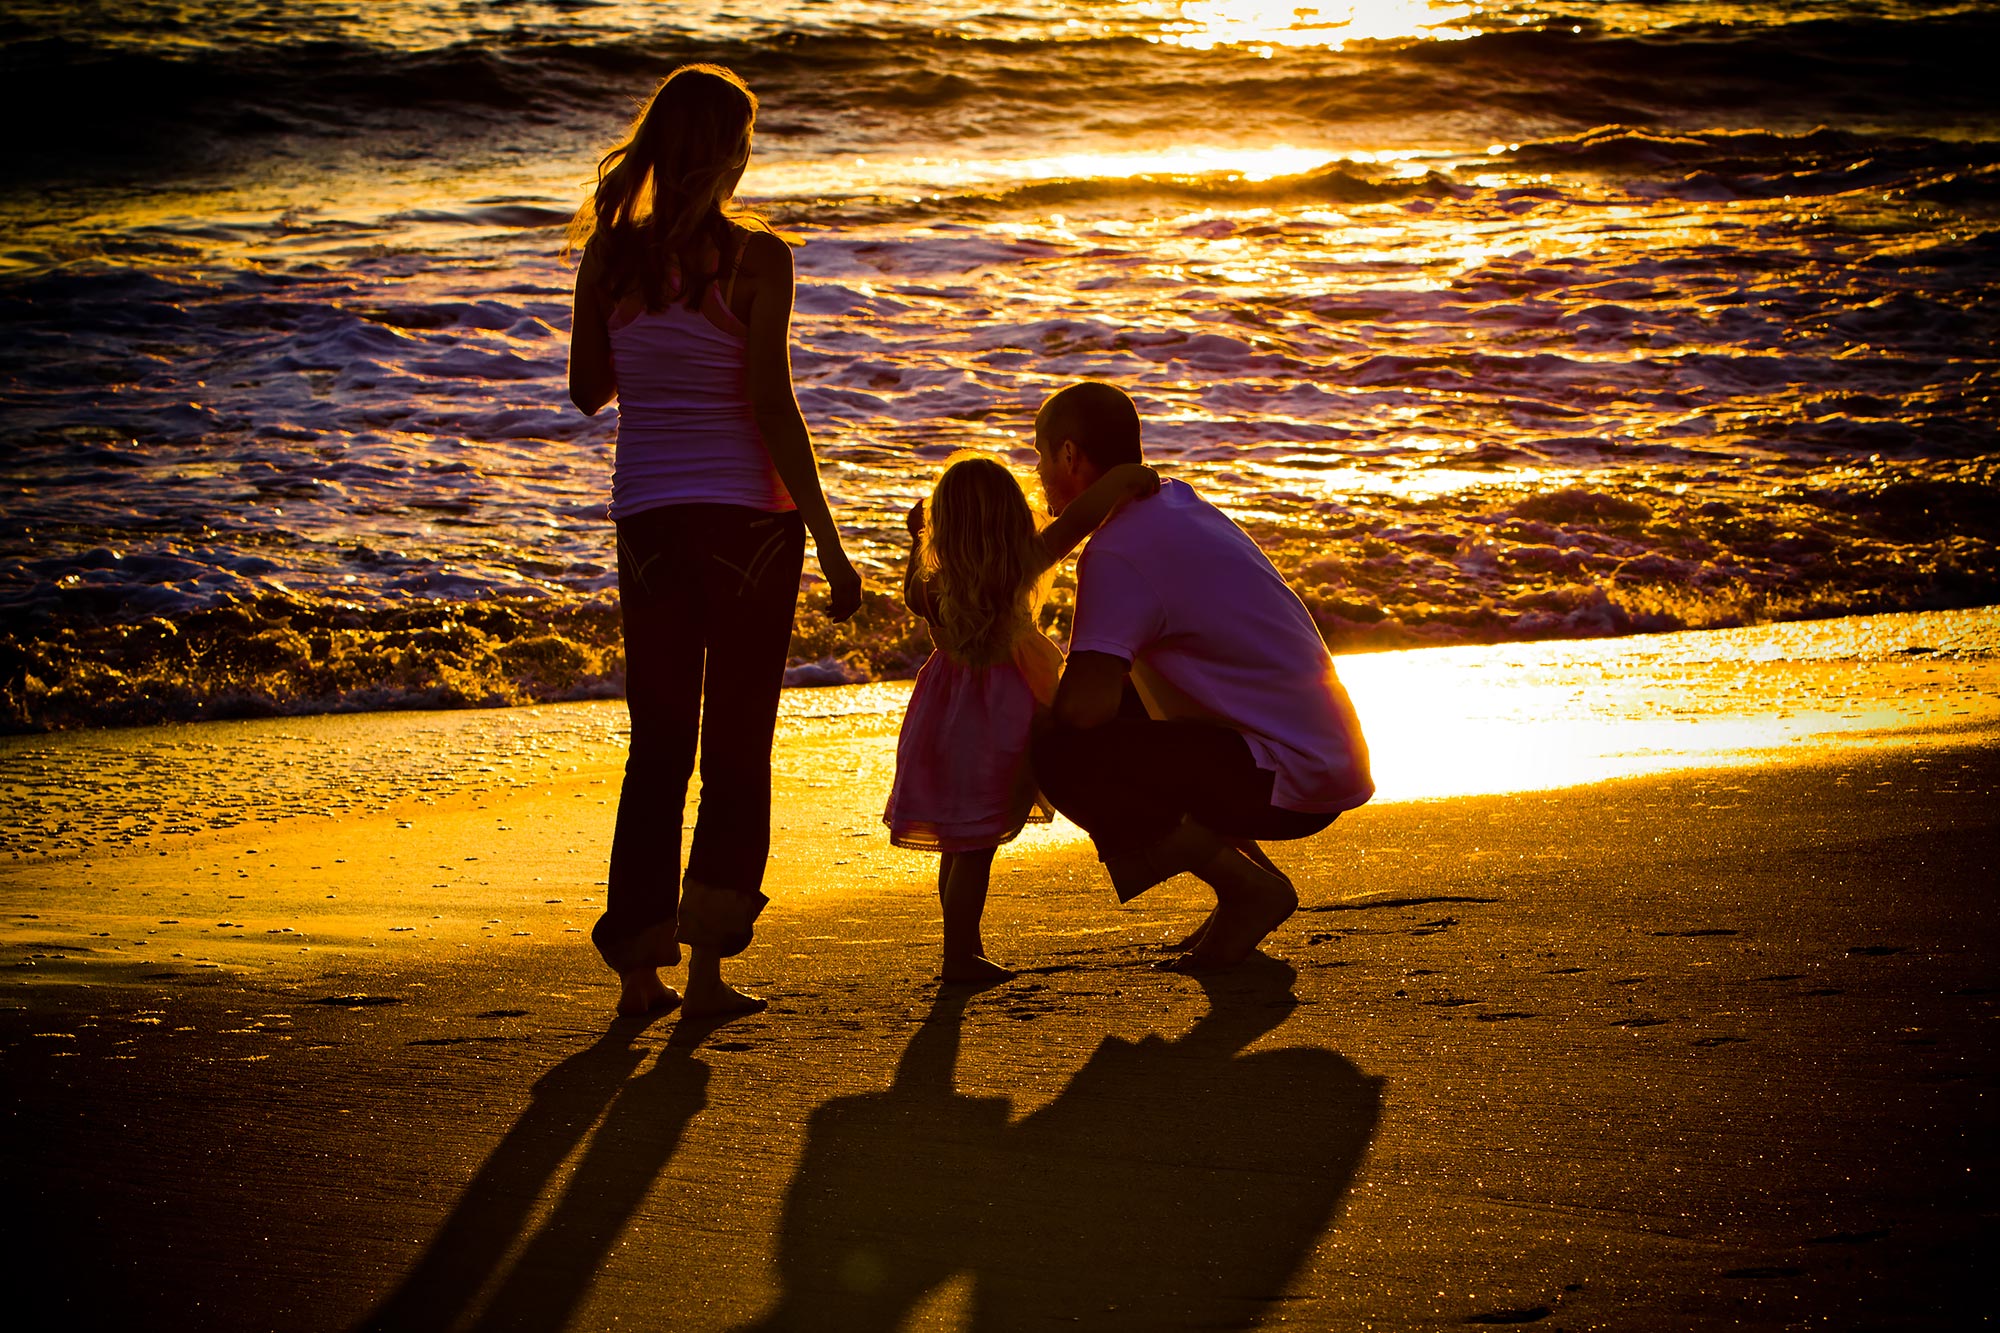 Cape Cod Family Portrait Photographer | Stephen Grant Photography